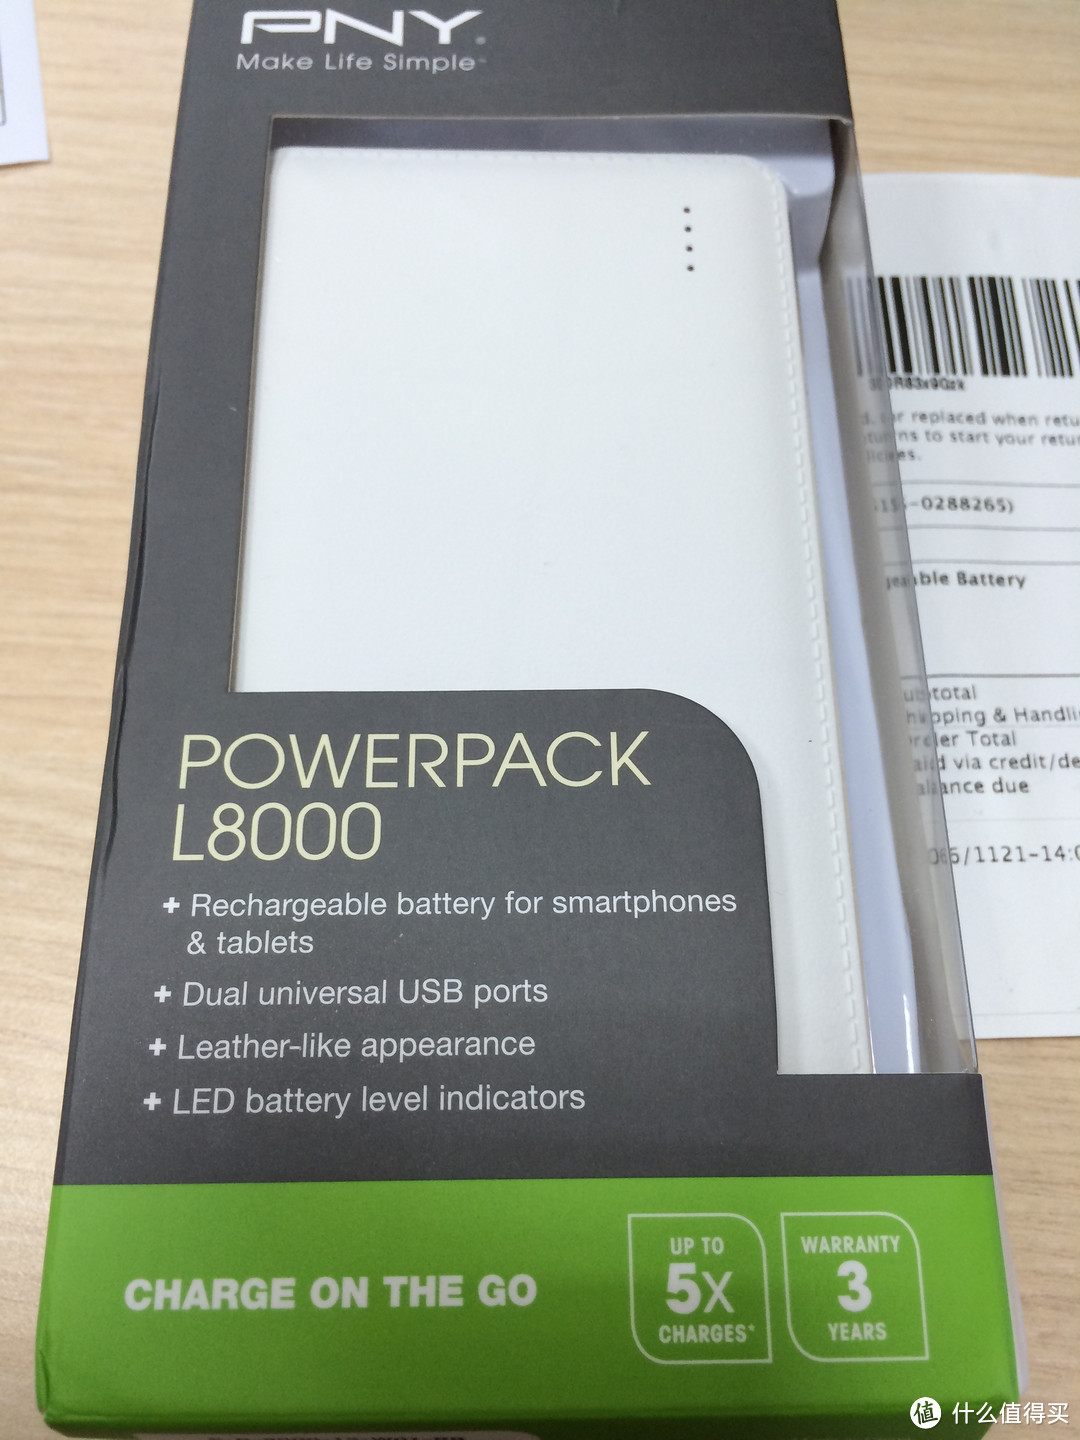 PNY 必恩威 PowerPack L8000 移动电源amazon直邮闪电到手简单评测